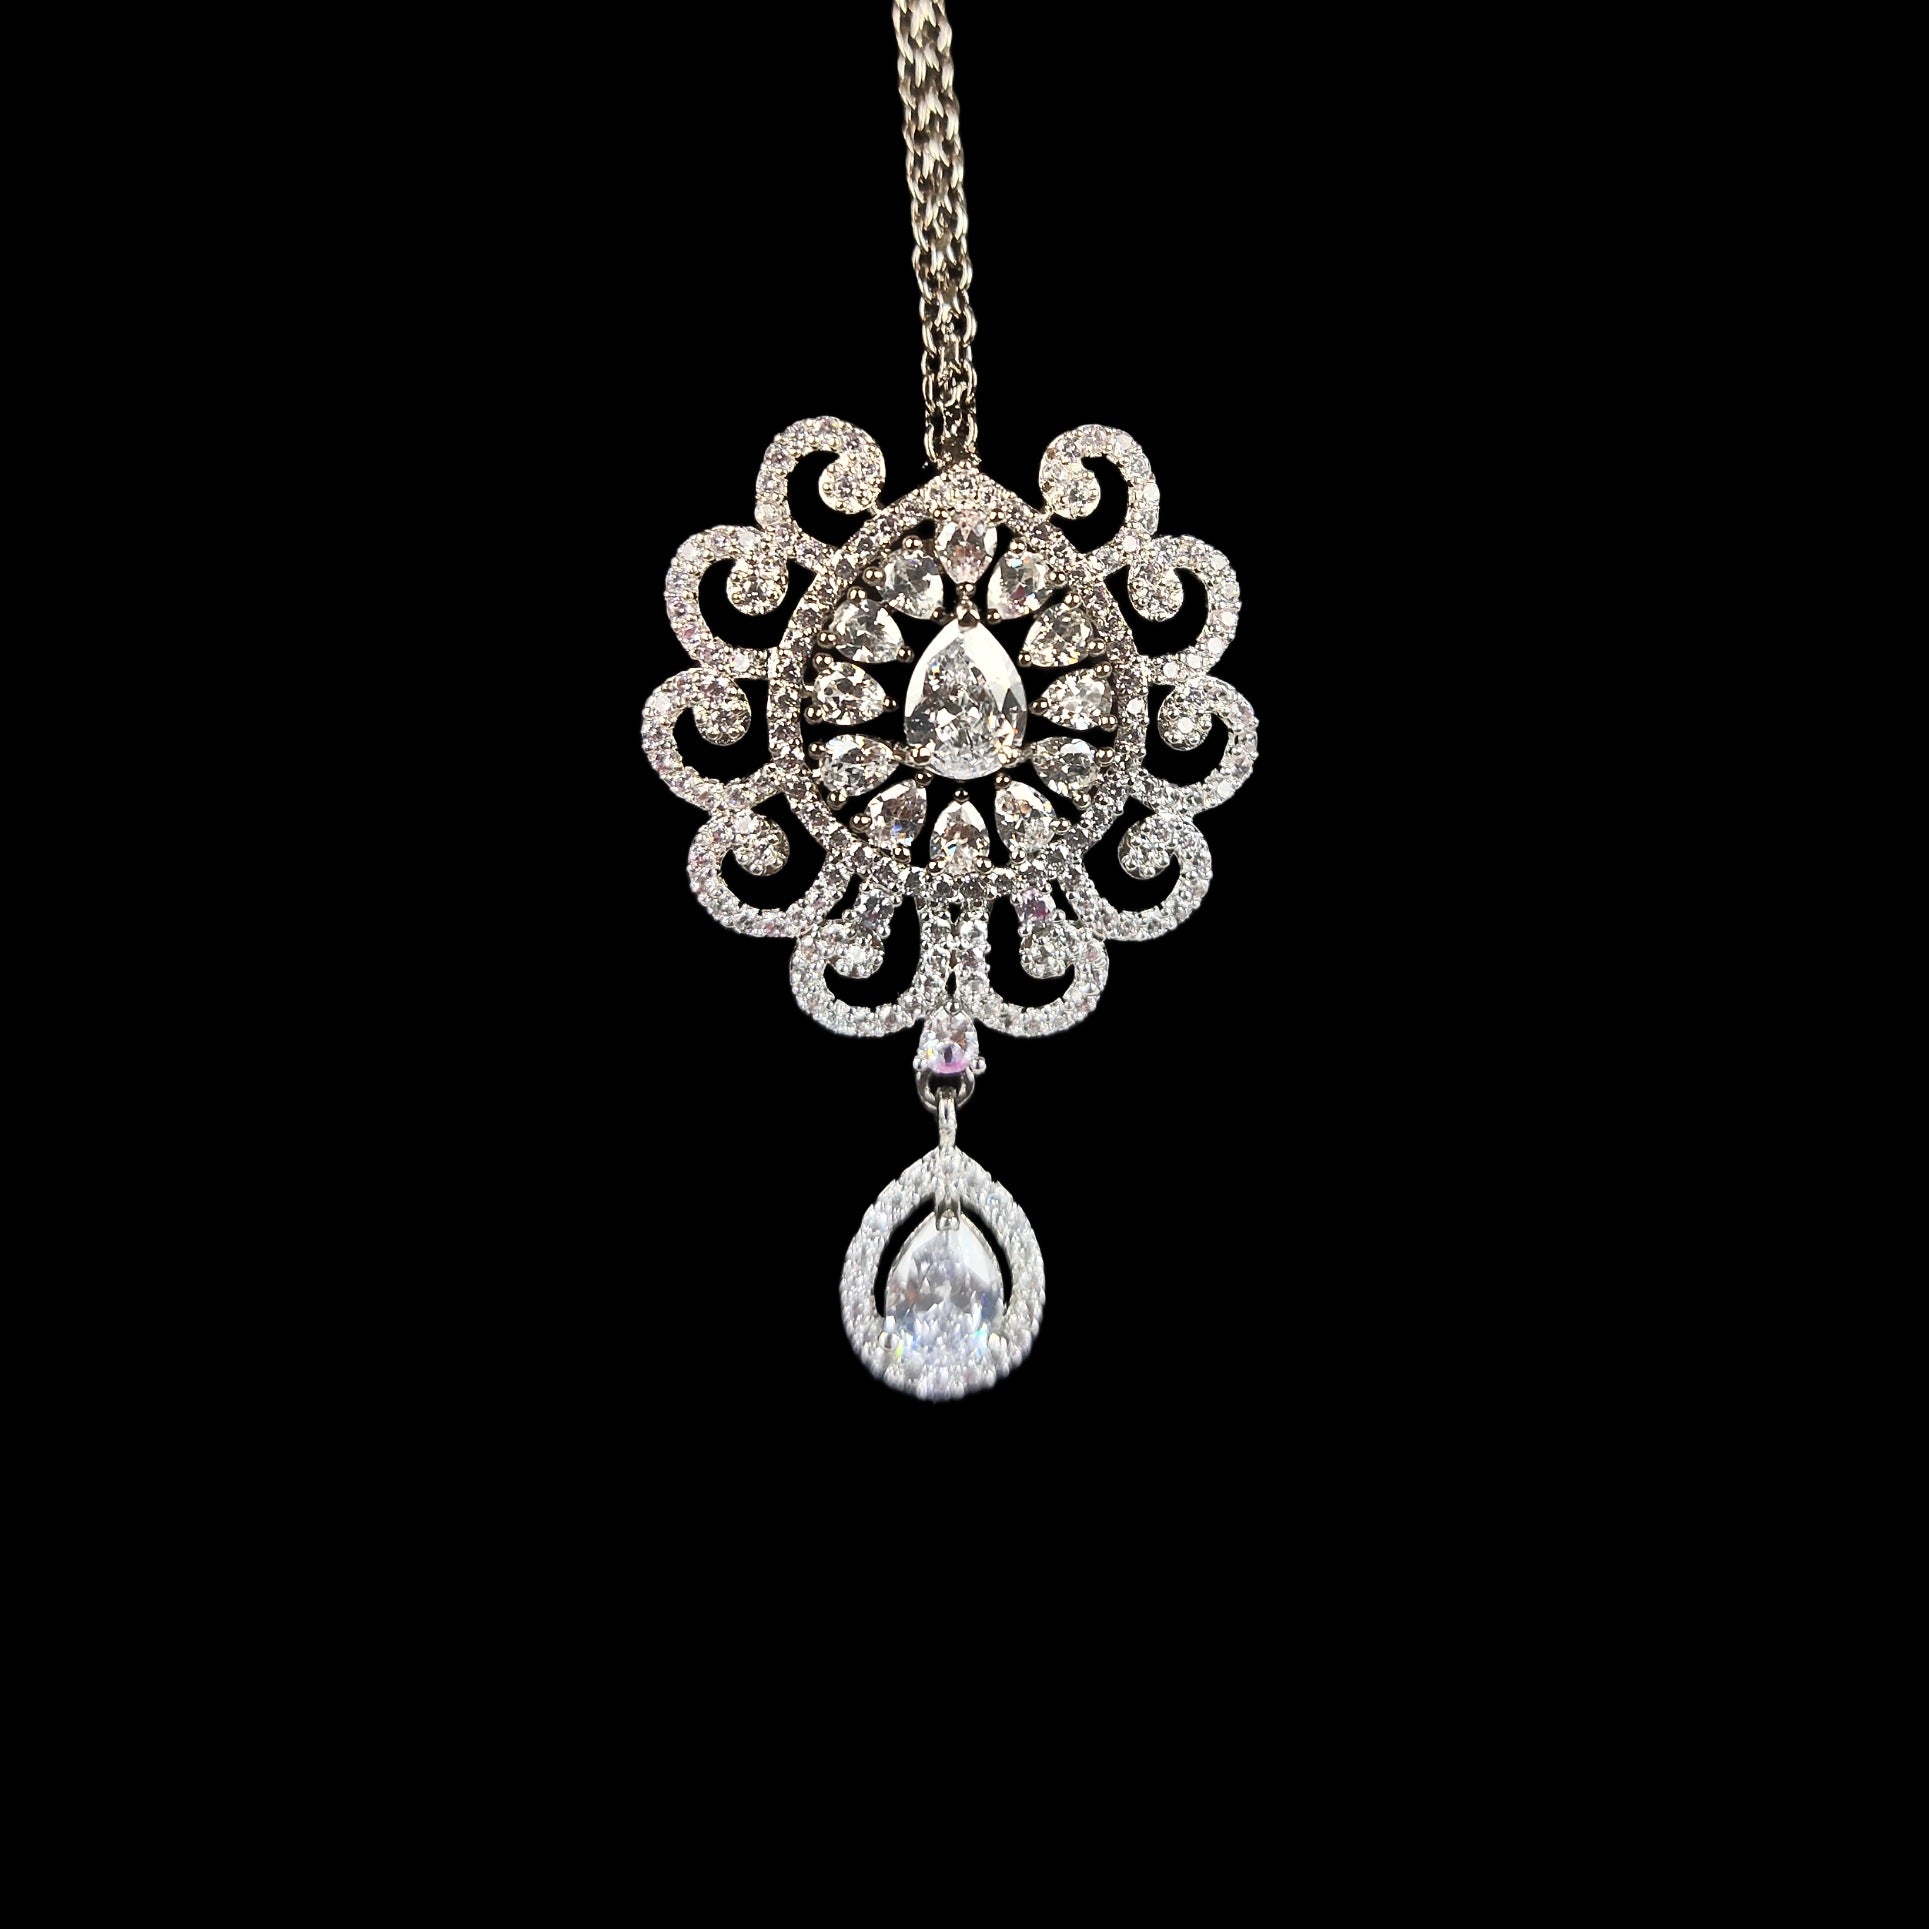 Eternal Splendor: Antique Georgian/Victorian Diamond Tiara & Necklace Set  with 500+ Diamonds: Description by Adin Antique Jewelry.